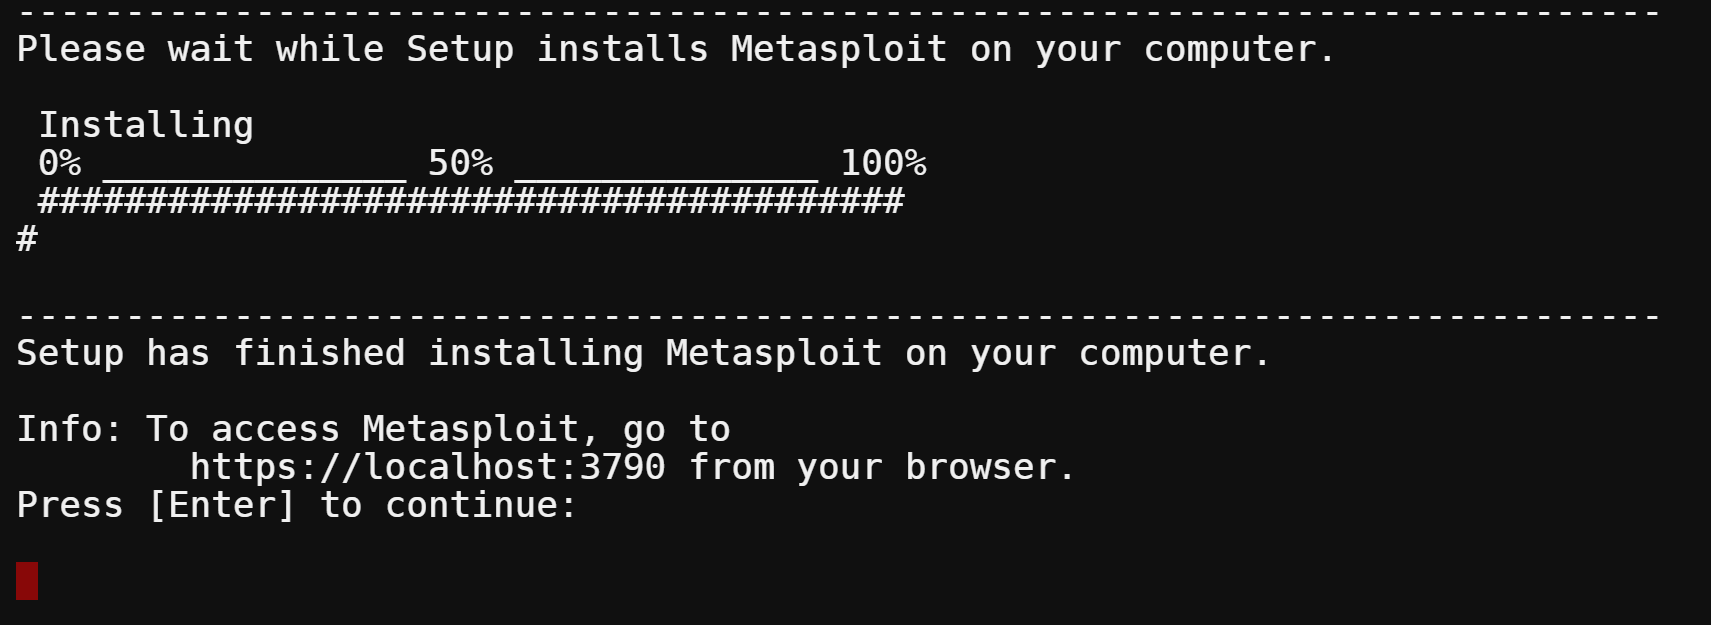 Successfully installed Metasploit